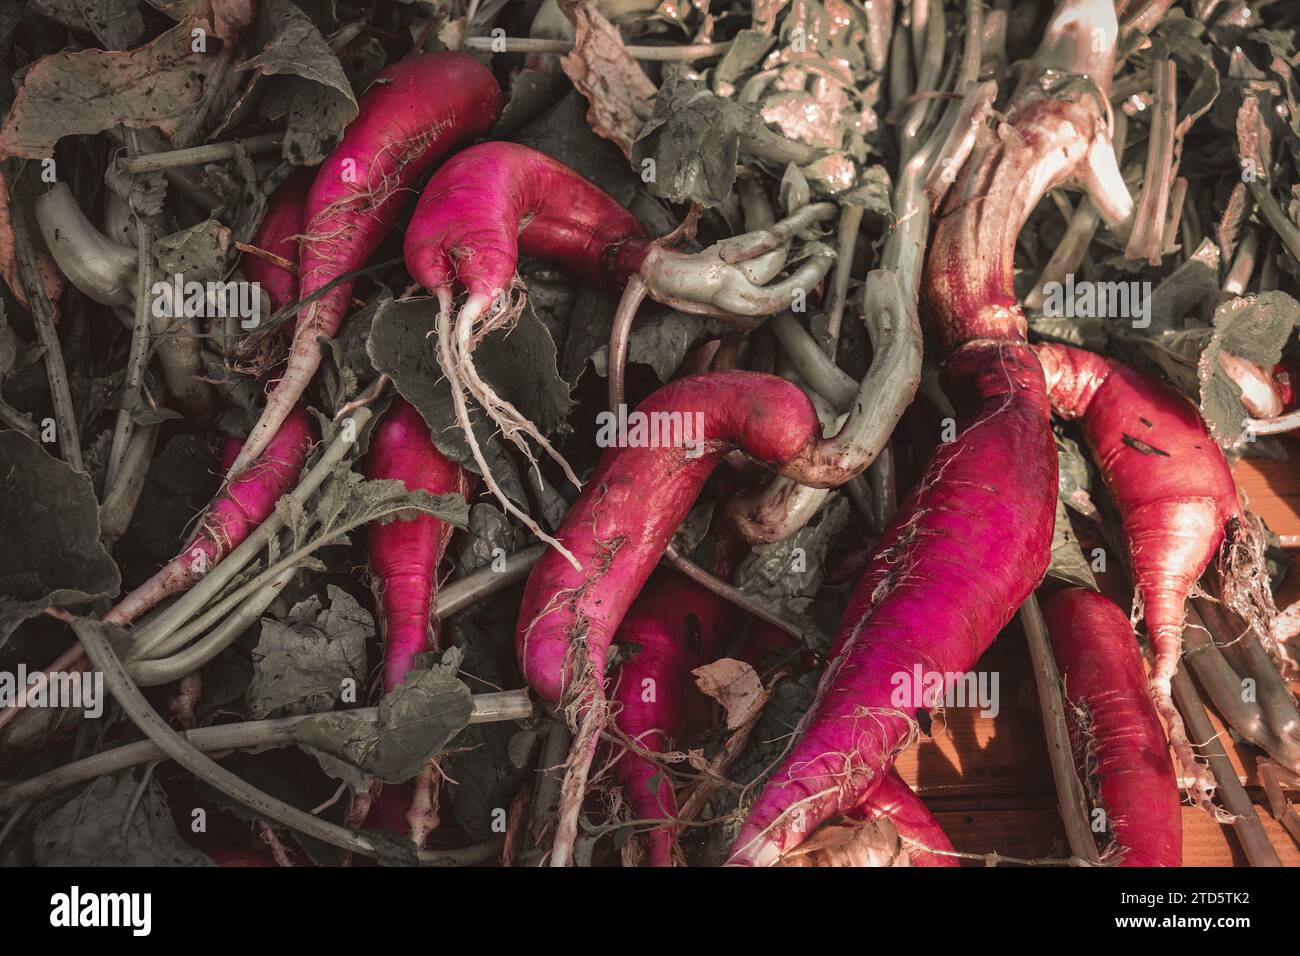 Closeup of organically grown radishes Stock Photo